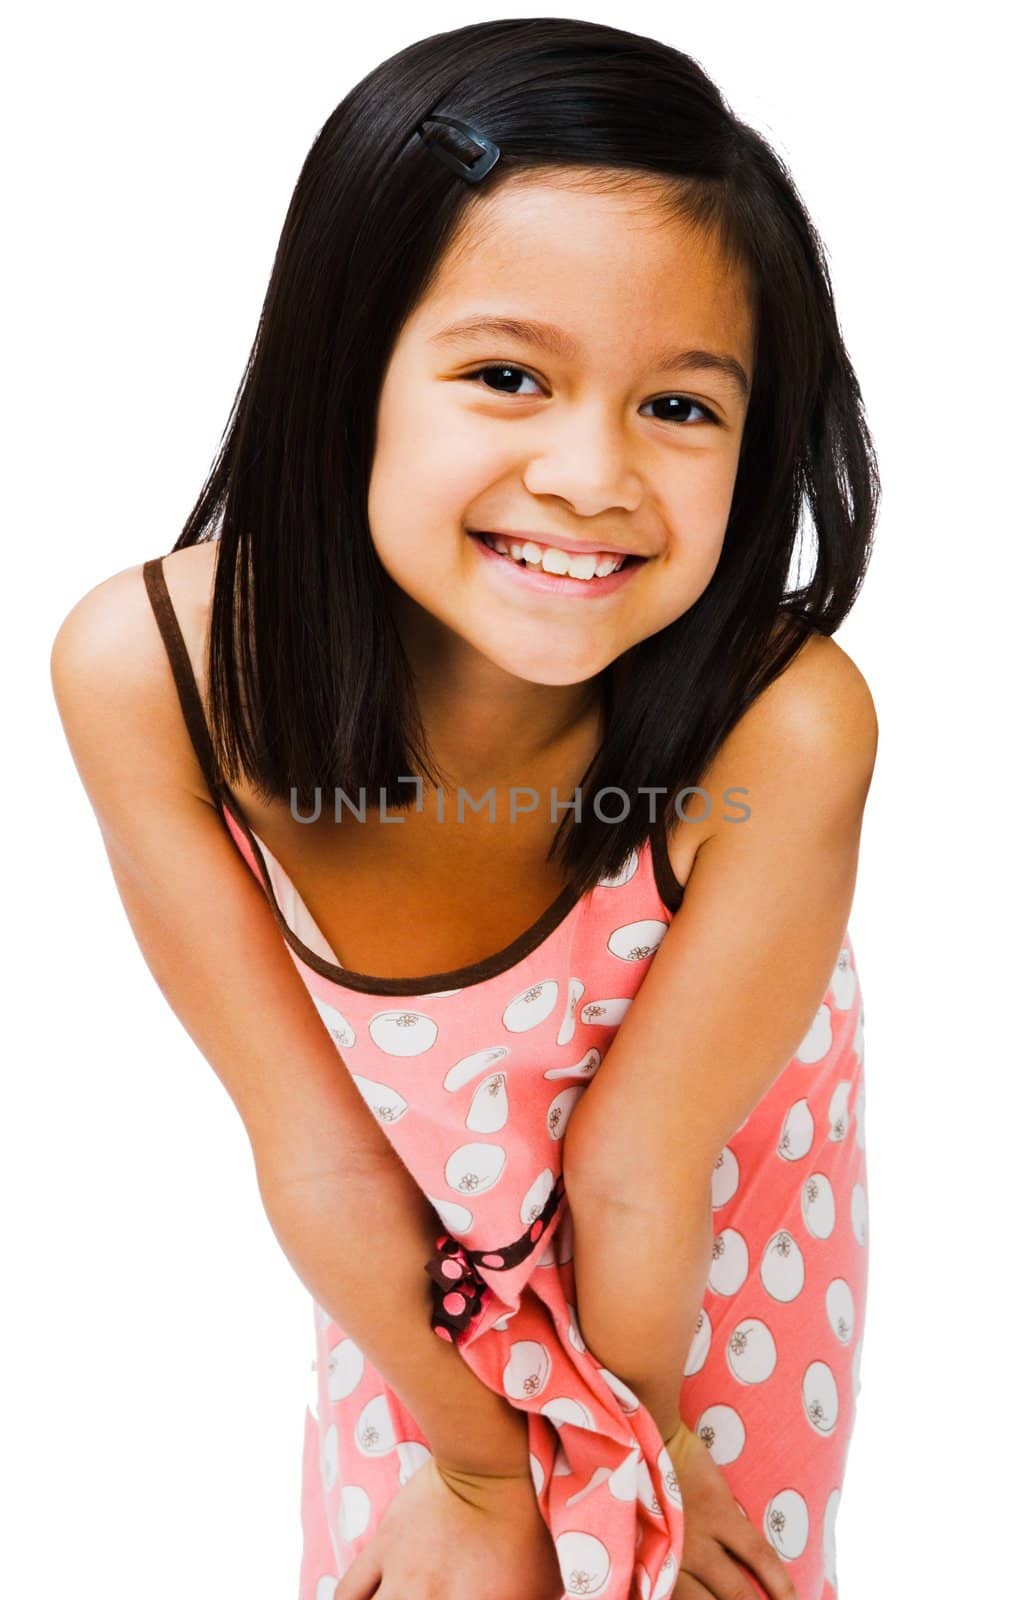 Smiling girl posing isolated over white